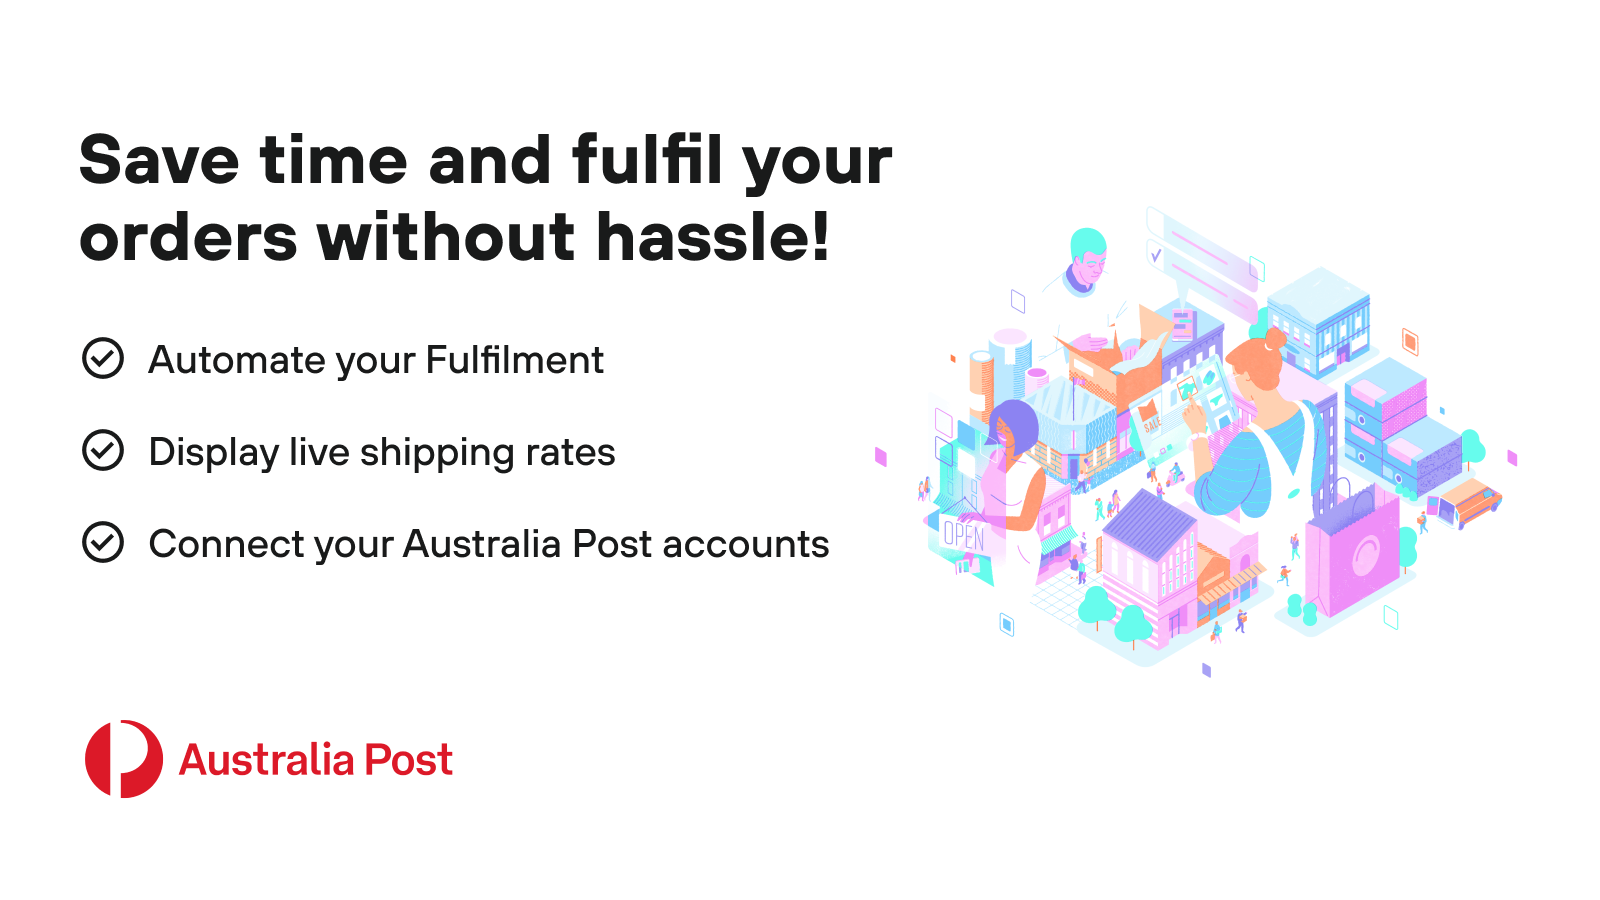 Display live shipping rates & print Australia Post labels